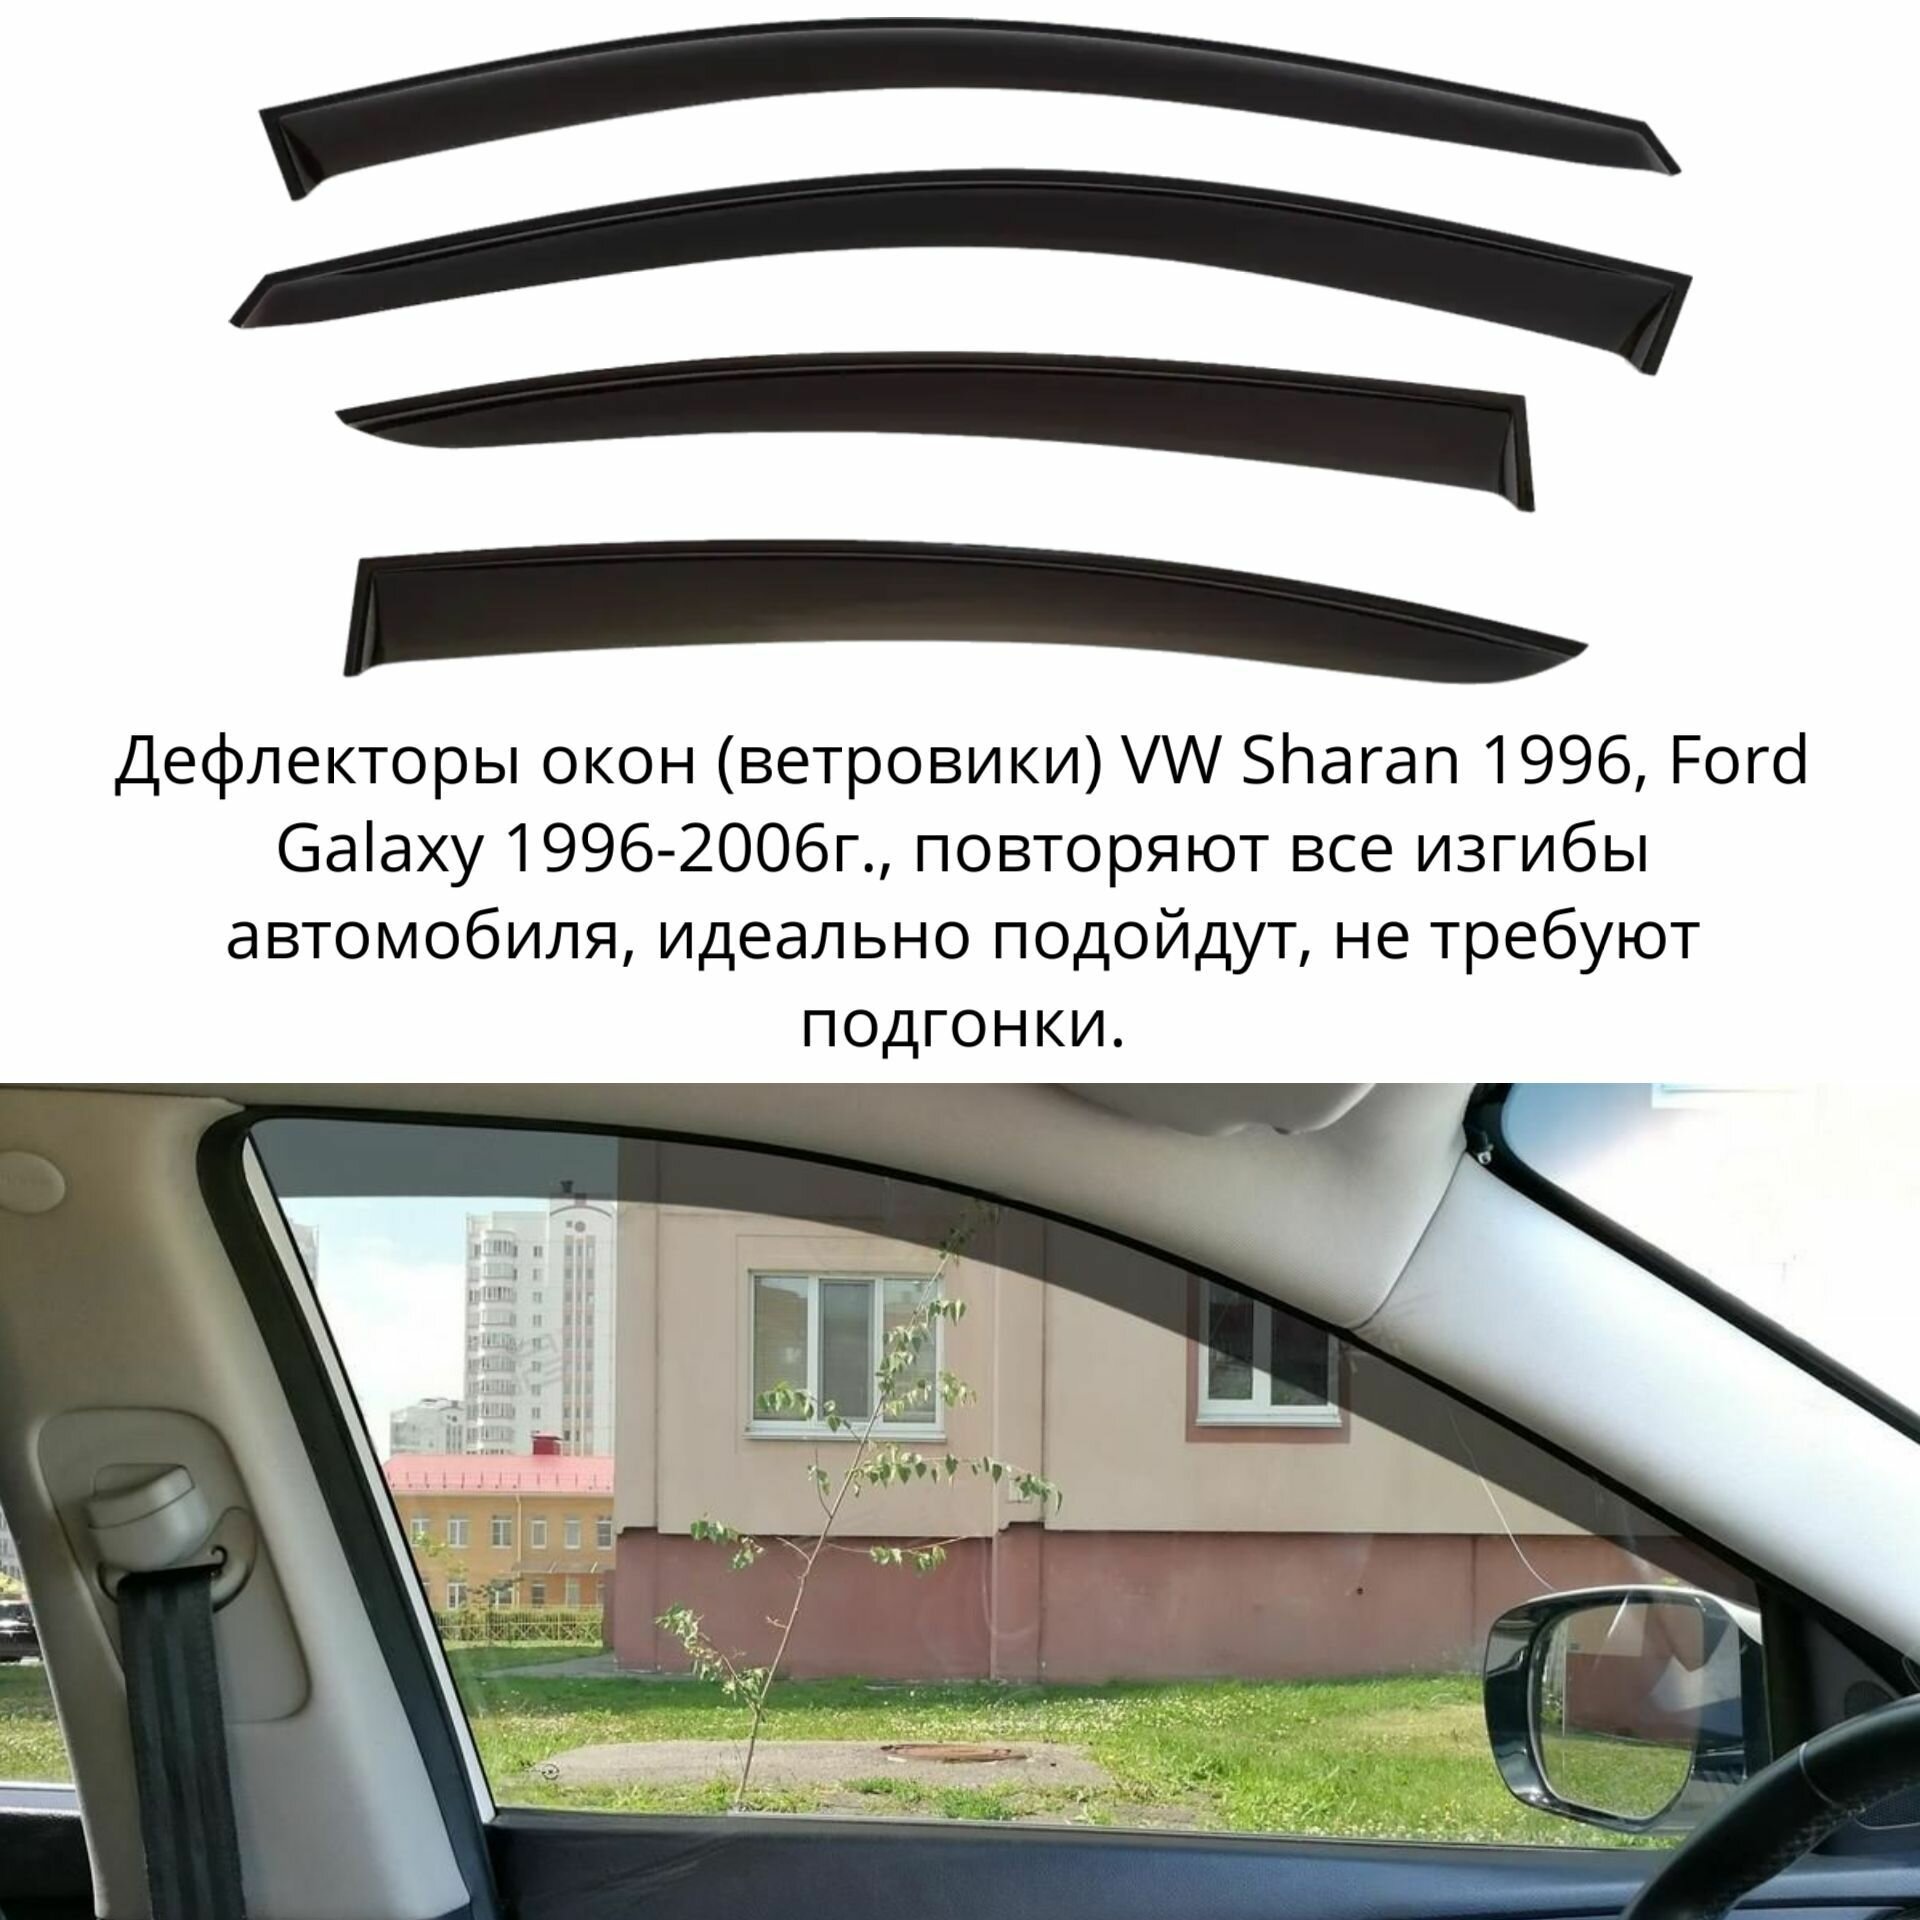 Дефлекторы окон (ветровики) для VW Sharan 1996 Ford Galaxy 1996-2006г